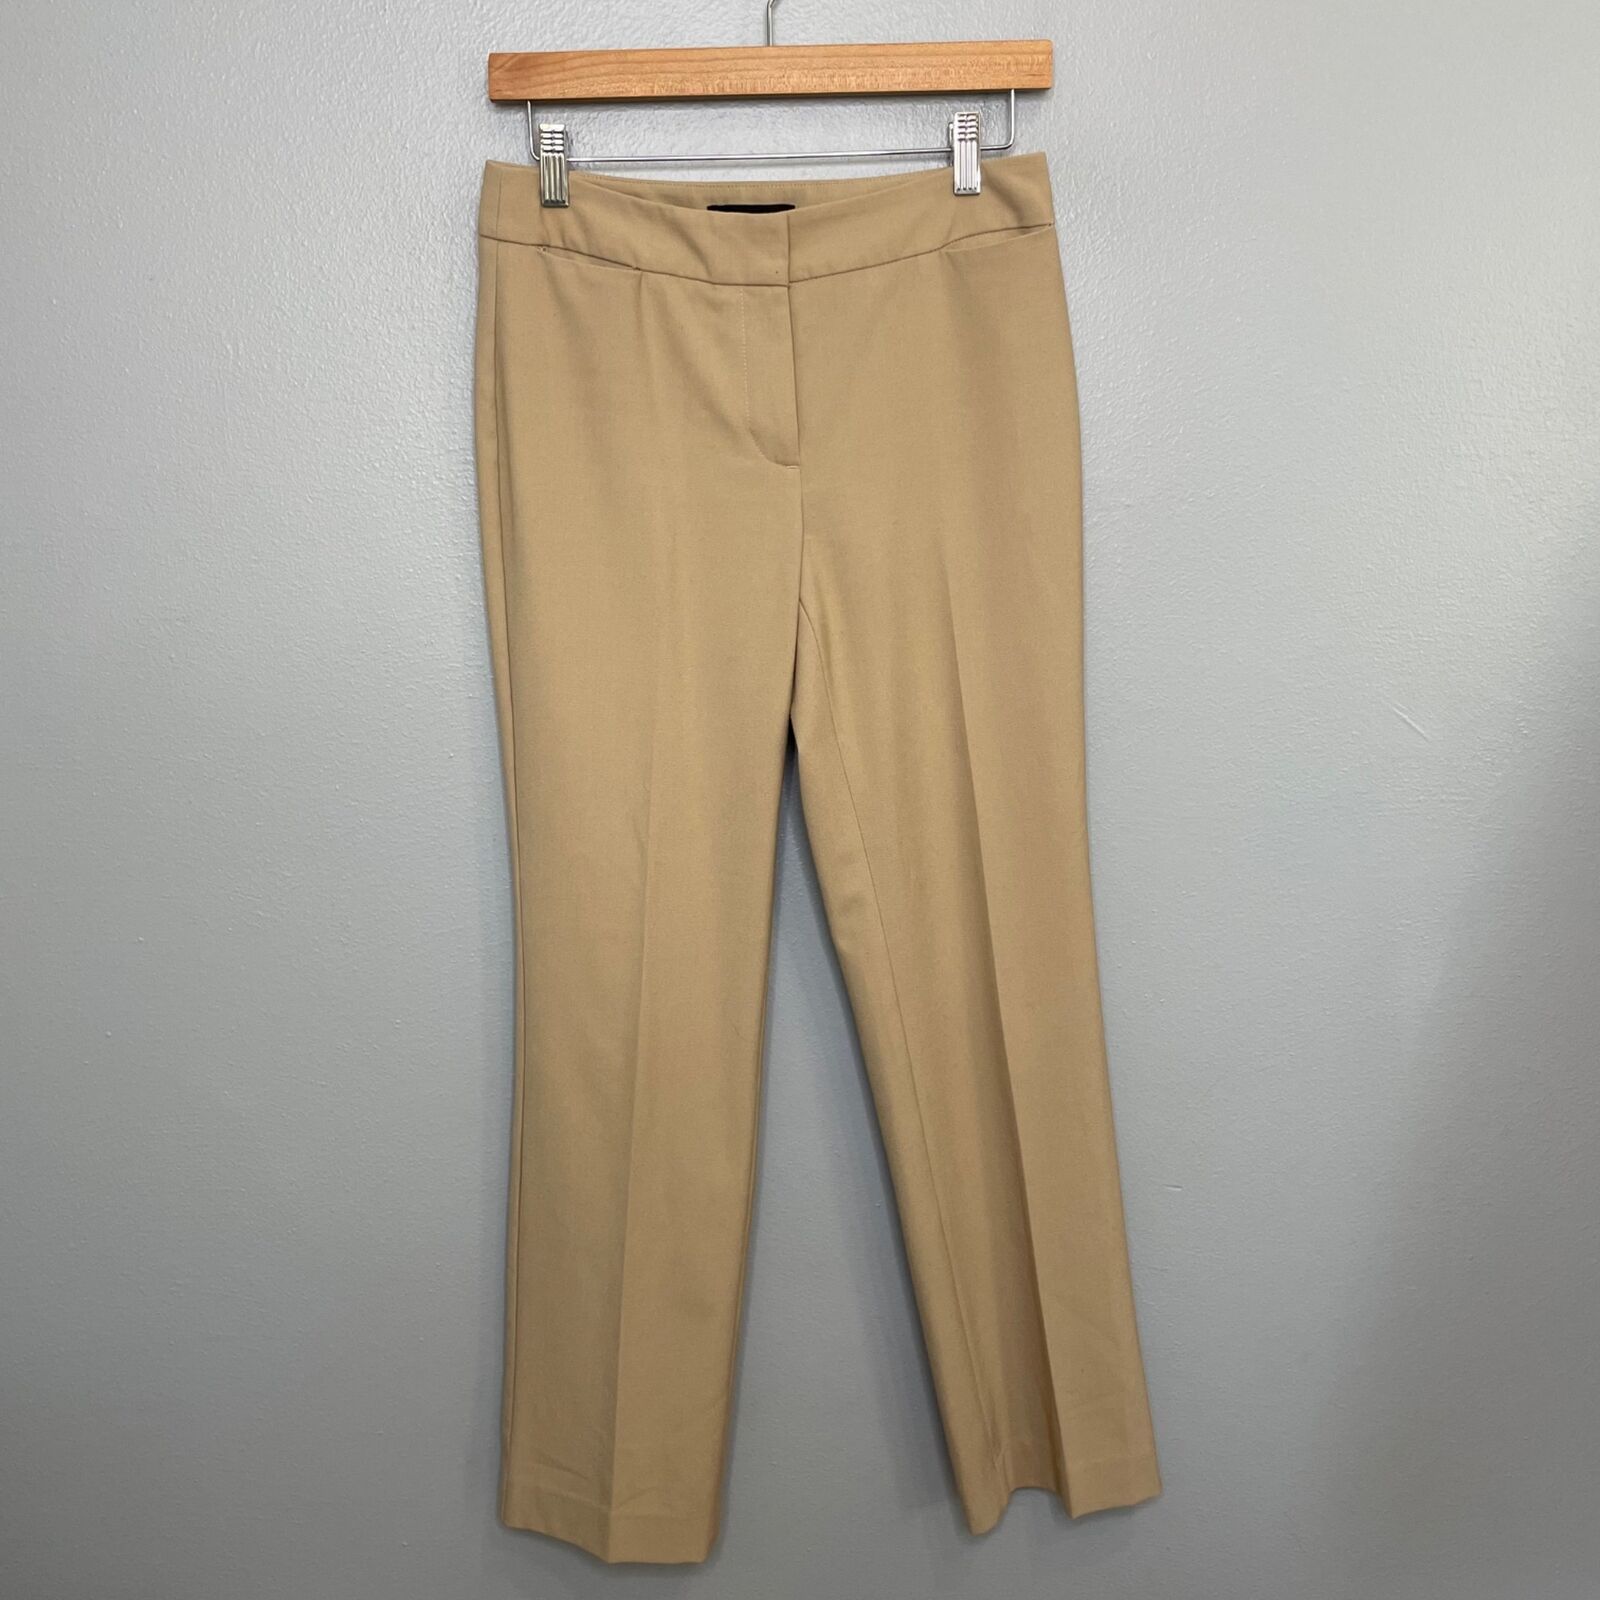 TALBOTS heritage tan crop trousers size 2P Petite… - image 1